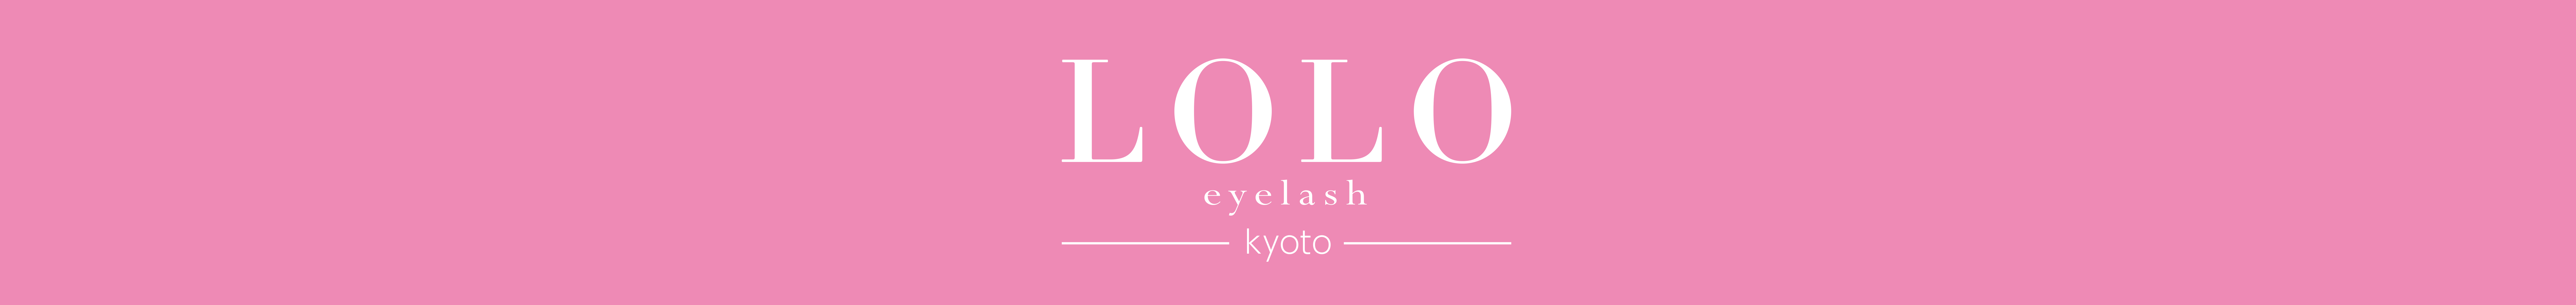 LOLO eyelash kyoto logo